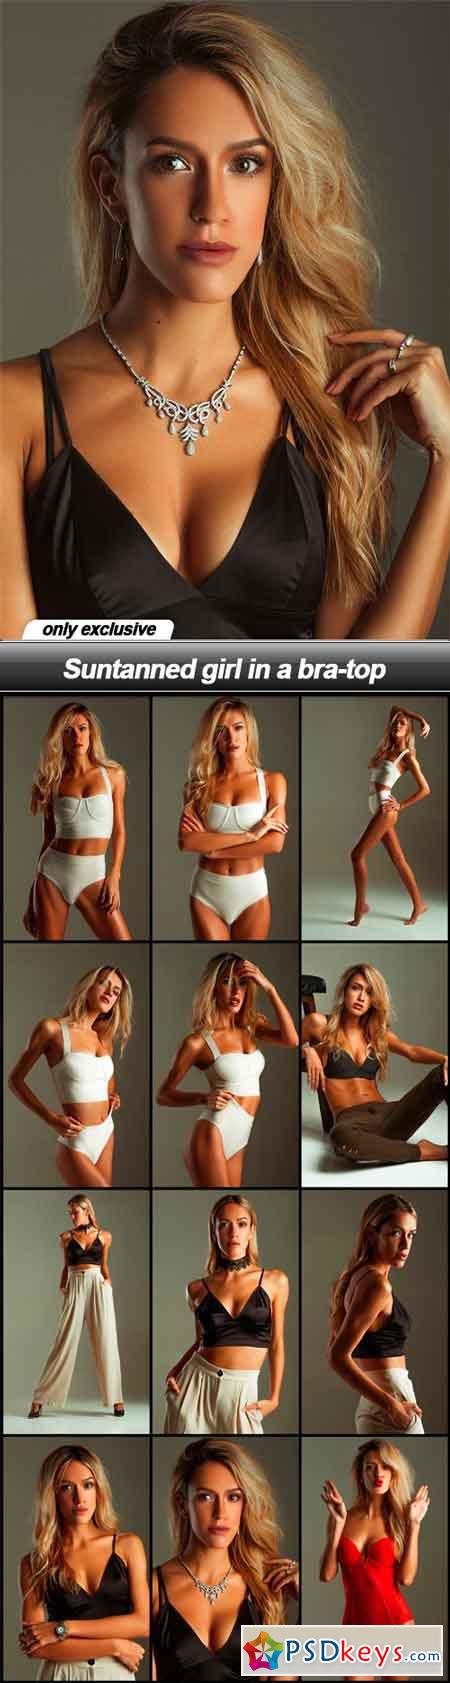 Suntanned girl in a bra-top - 12 UHQ JPEG